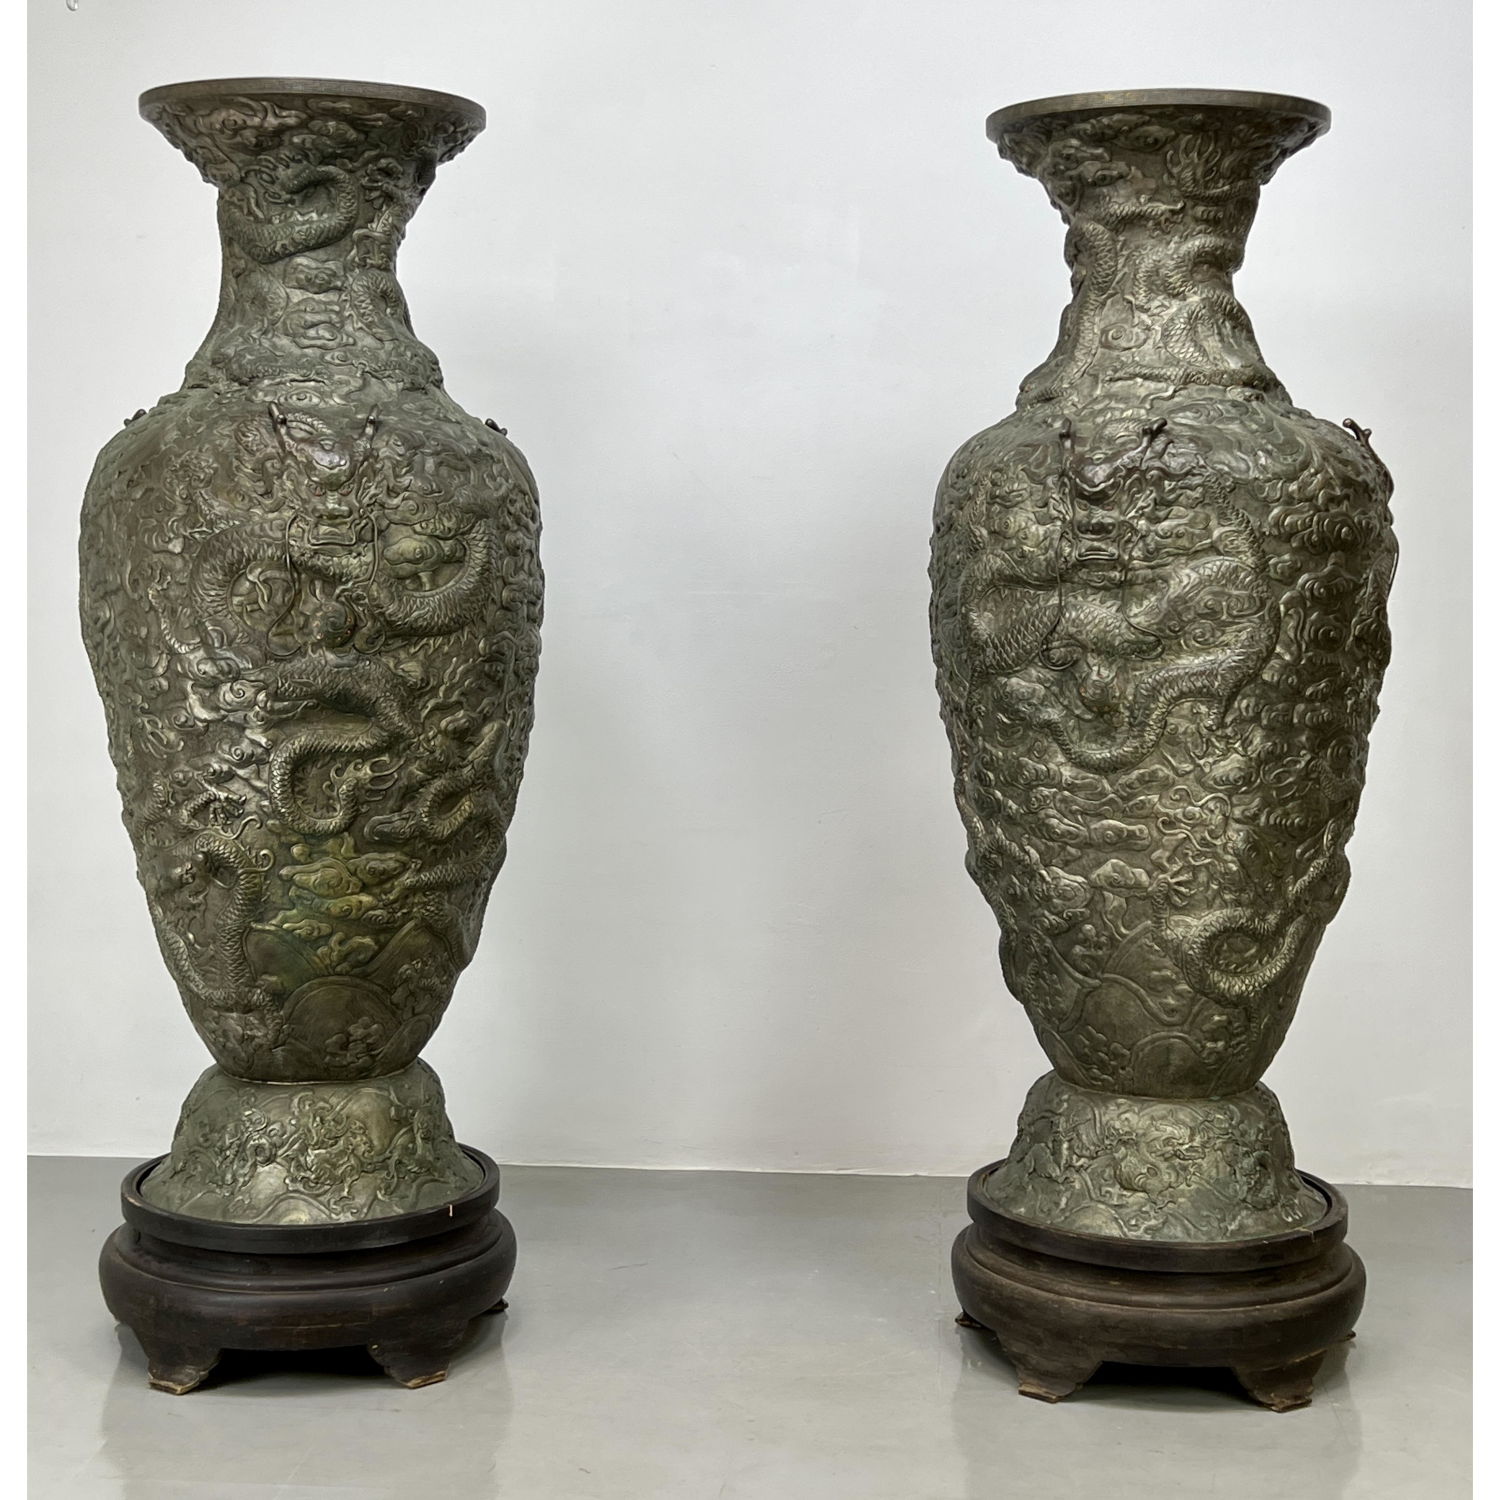 Pr 7 foot Tall Metal Urns Vases  2b917b